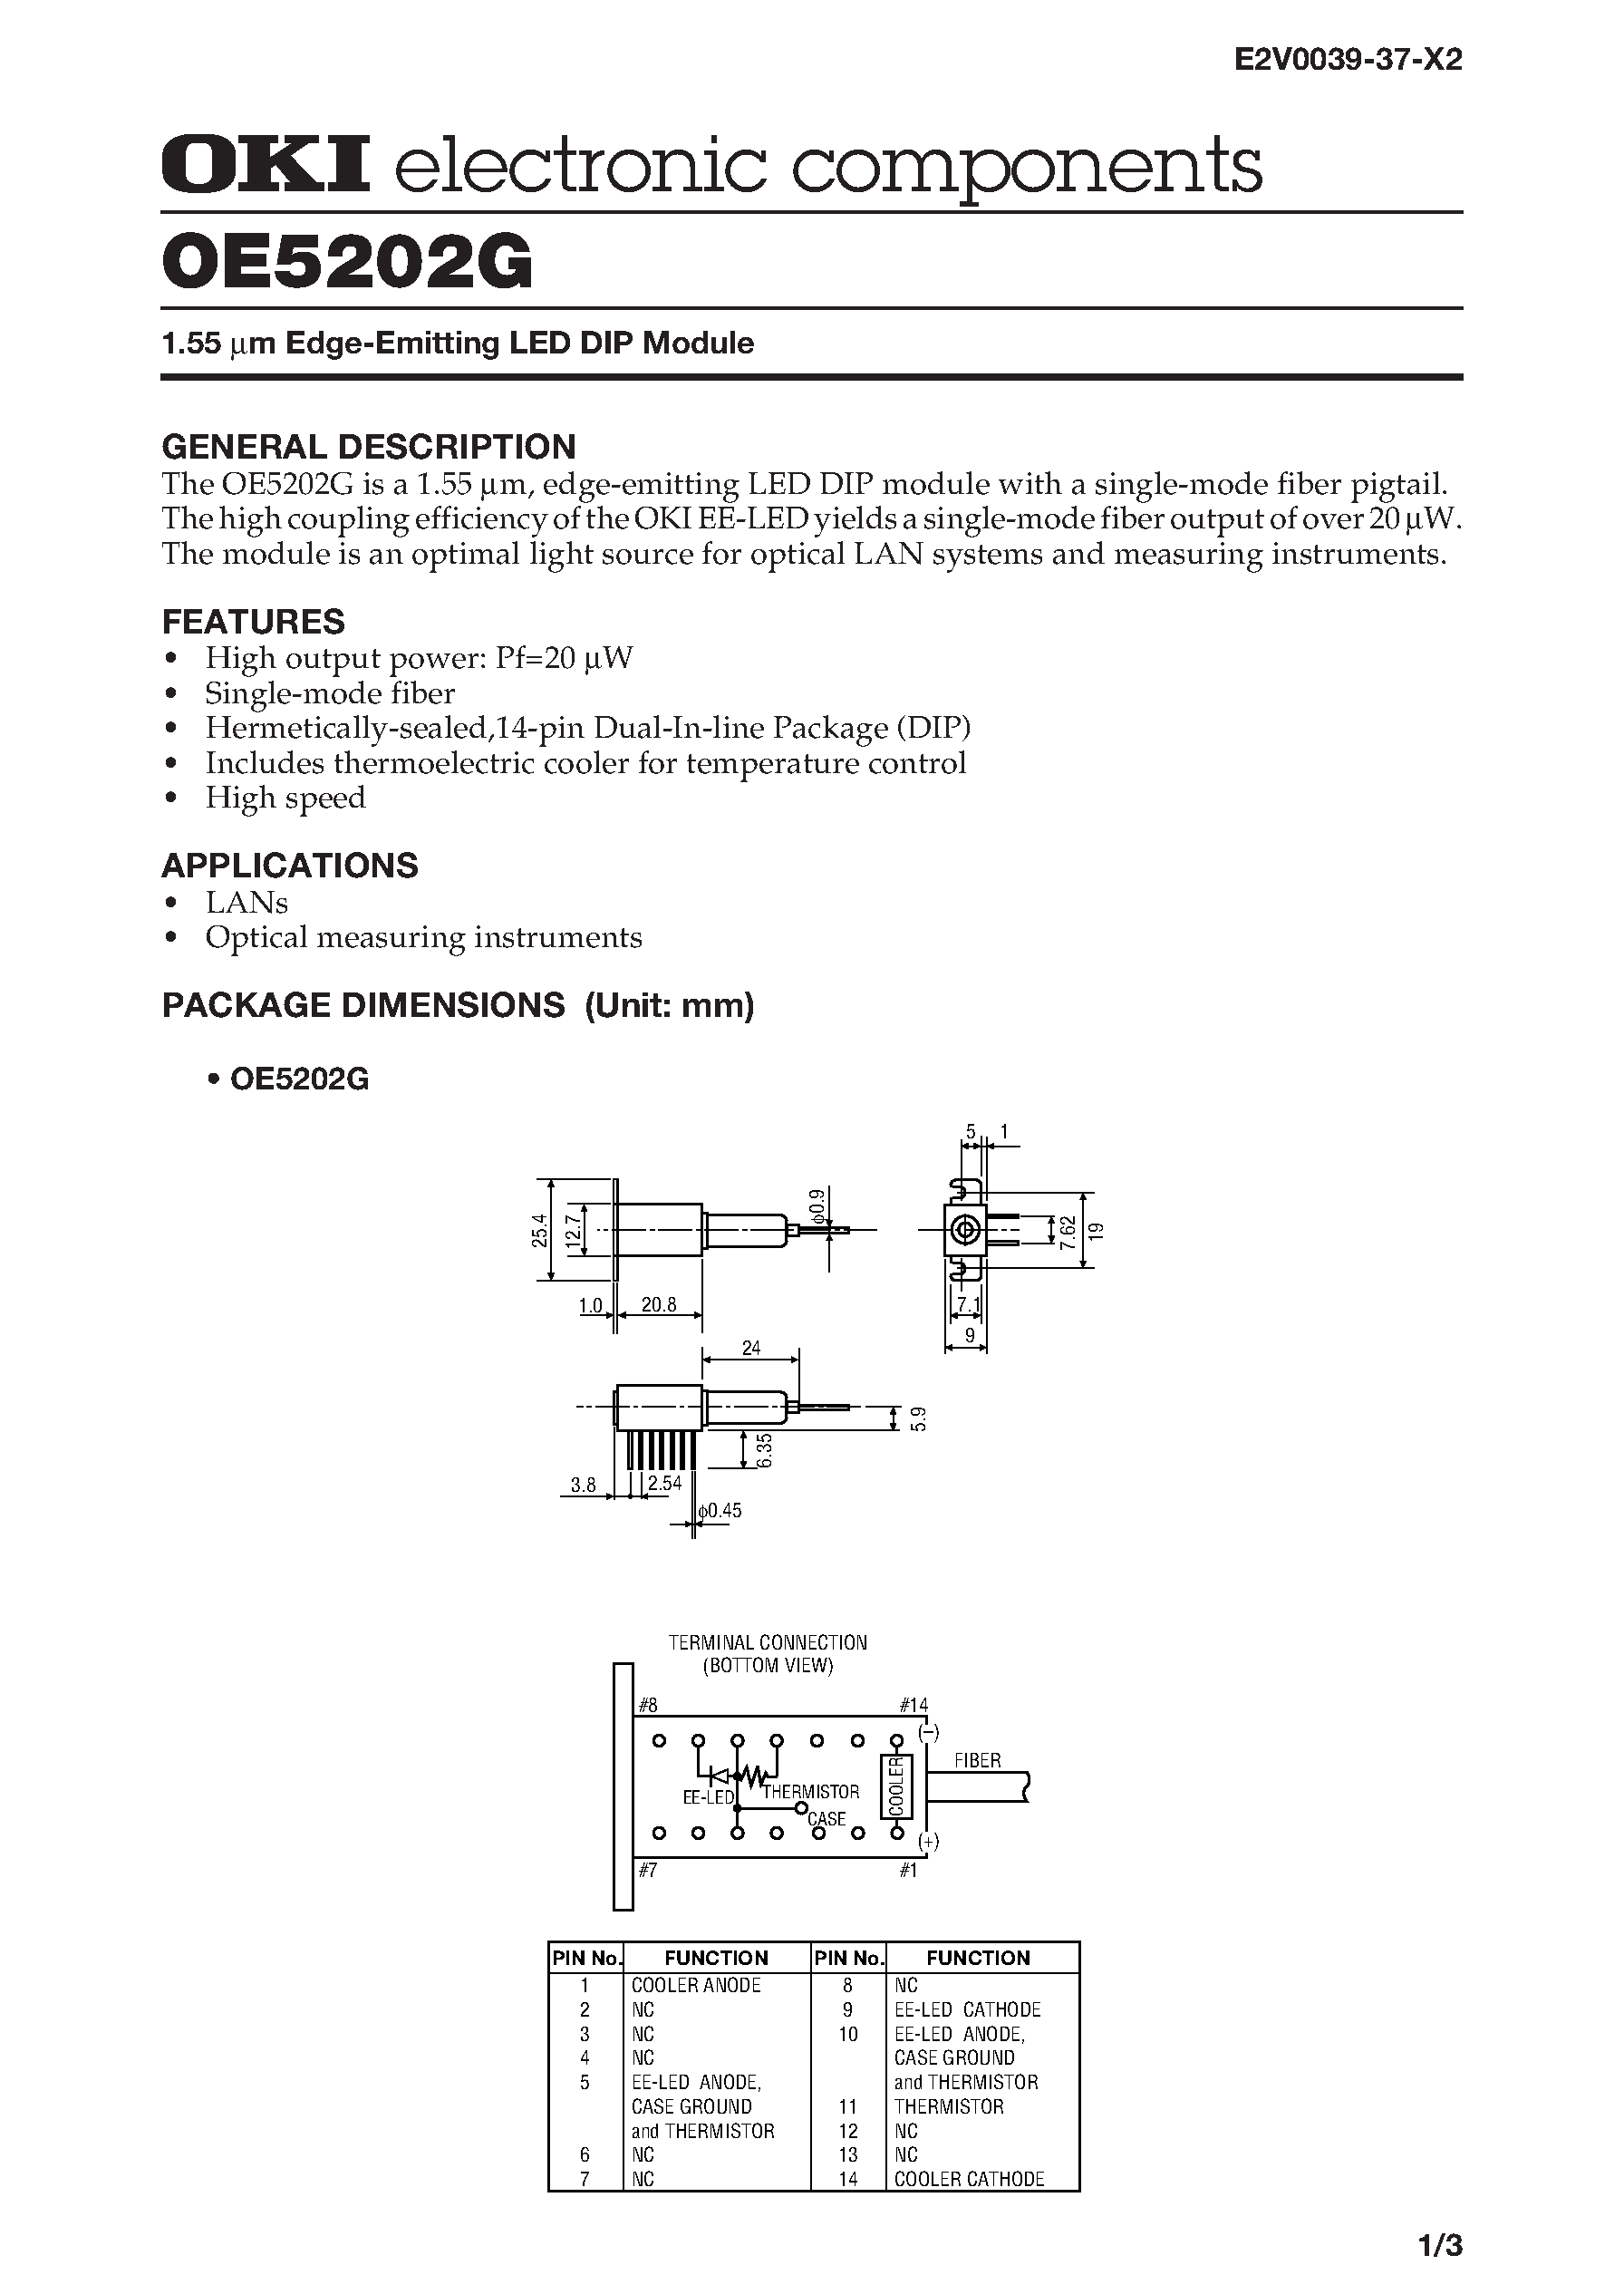 Datasheet OE5202G - 1.55 m Edge-Emitting LED DIP Module page 1